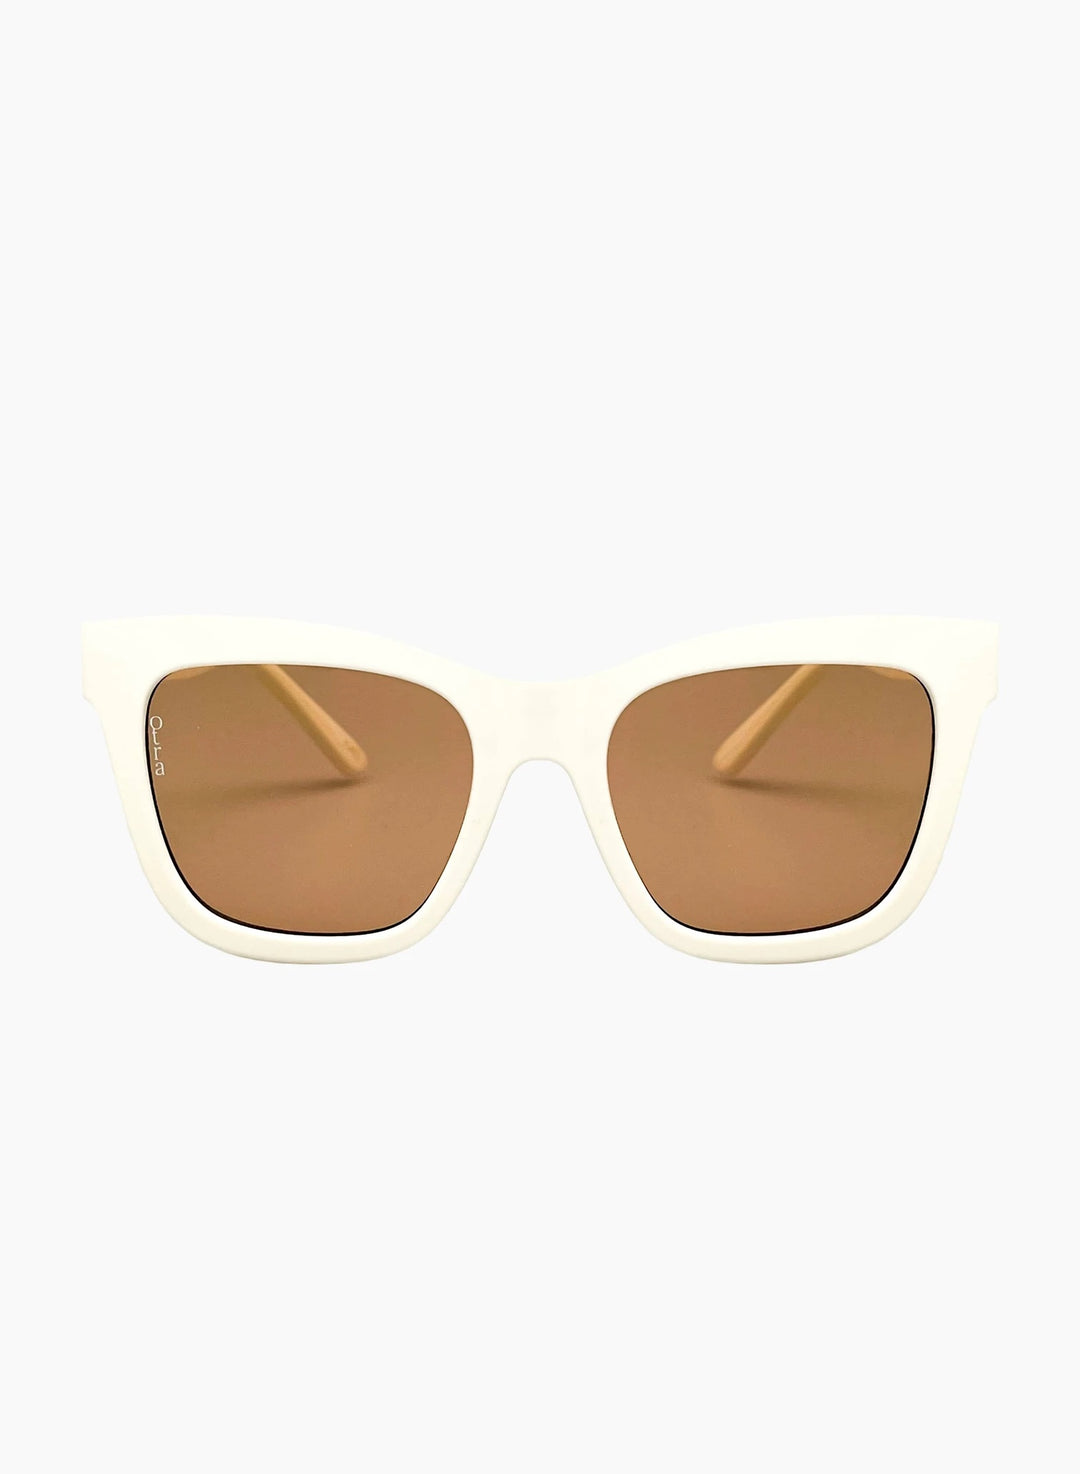 Otra Eyewear - Irma Sunglasses in Ivory/Cream